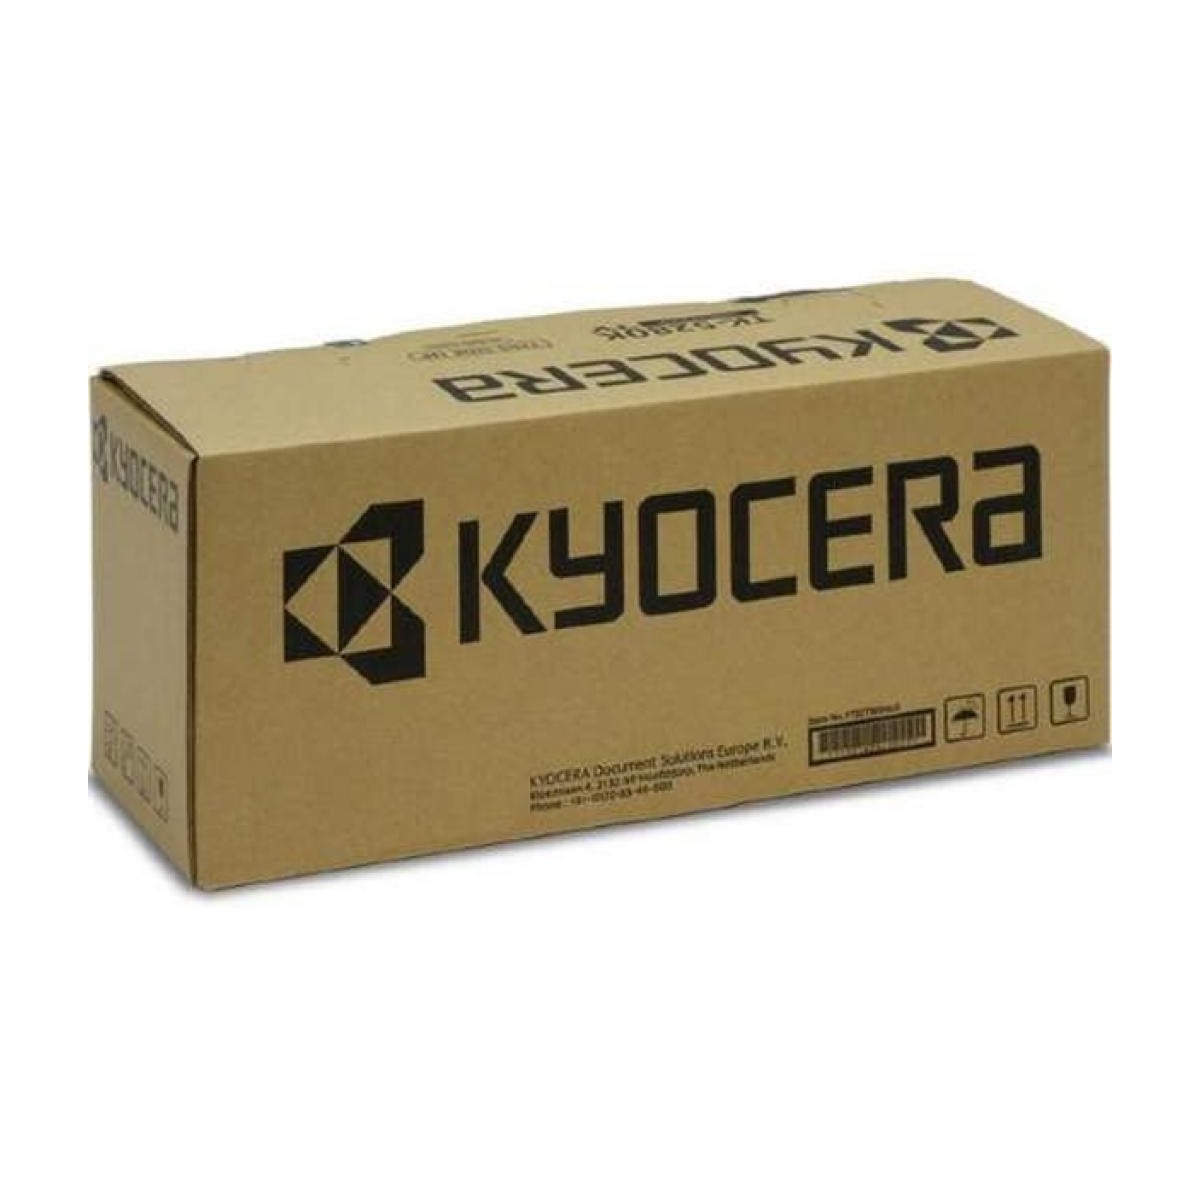 Kyocera TK-5440Y Toner Cartridge 2.4K pages - Toner Cartridge